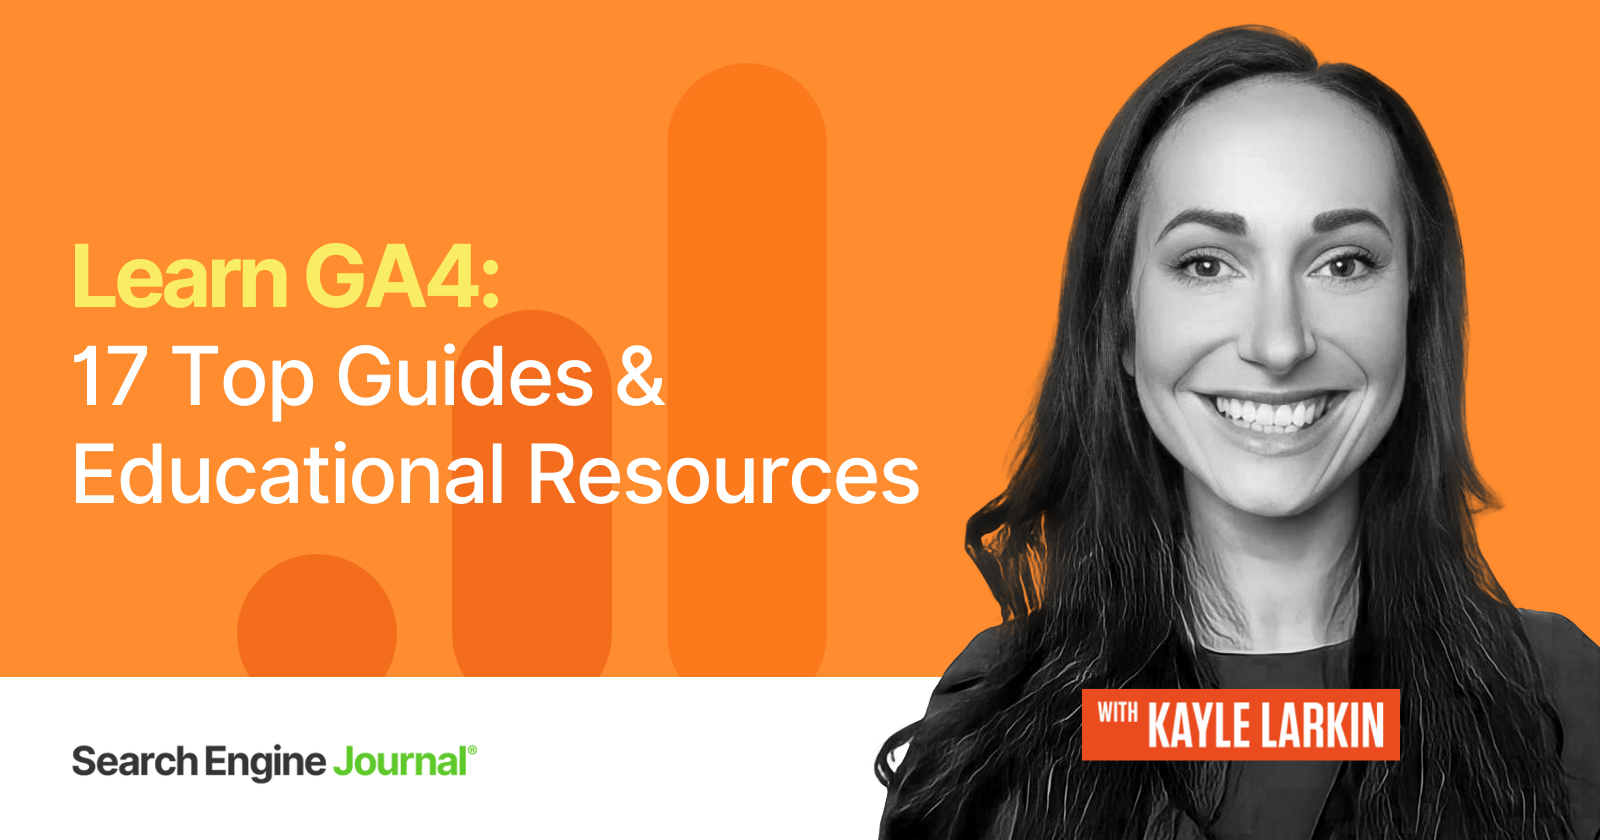 Learn GA4: 17 Top Guides & Educational Resources via @sejournal, @KayleLarkin